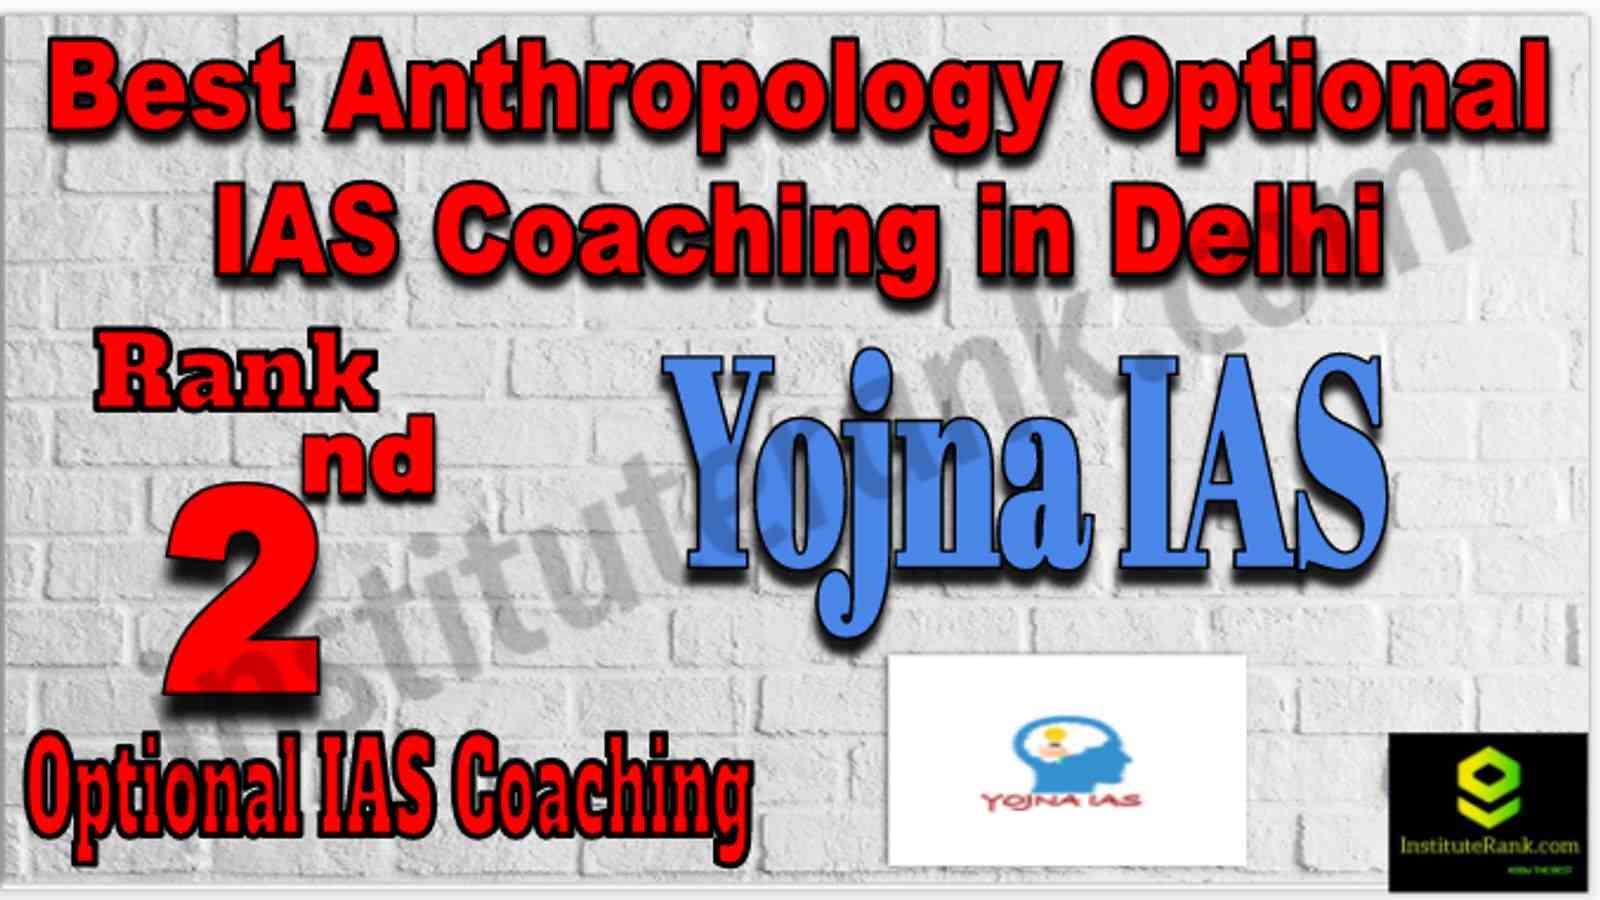 Rank 2 Best Anthropology Optional IAS Coaching